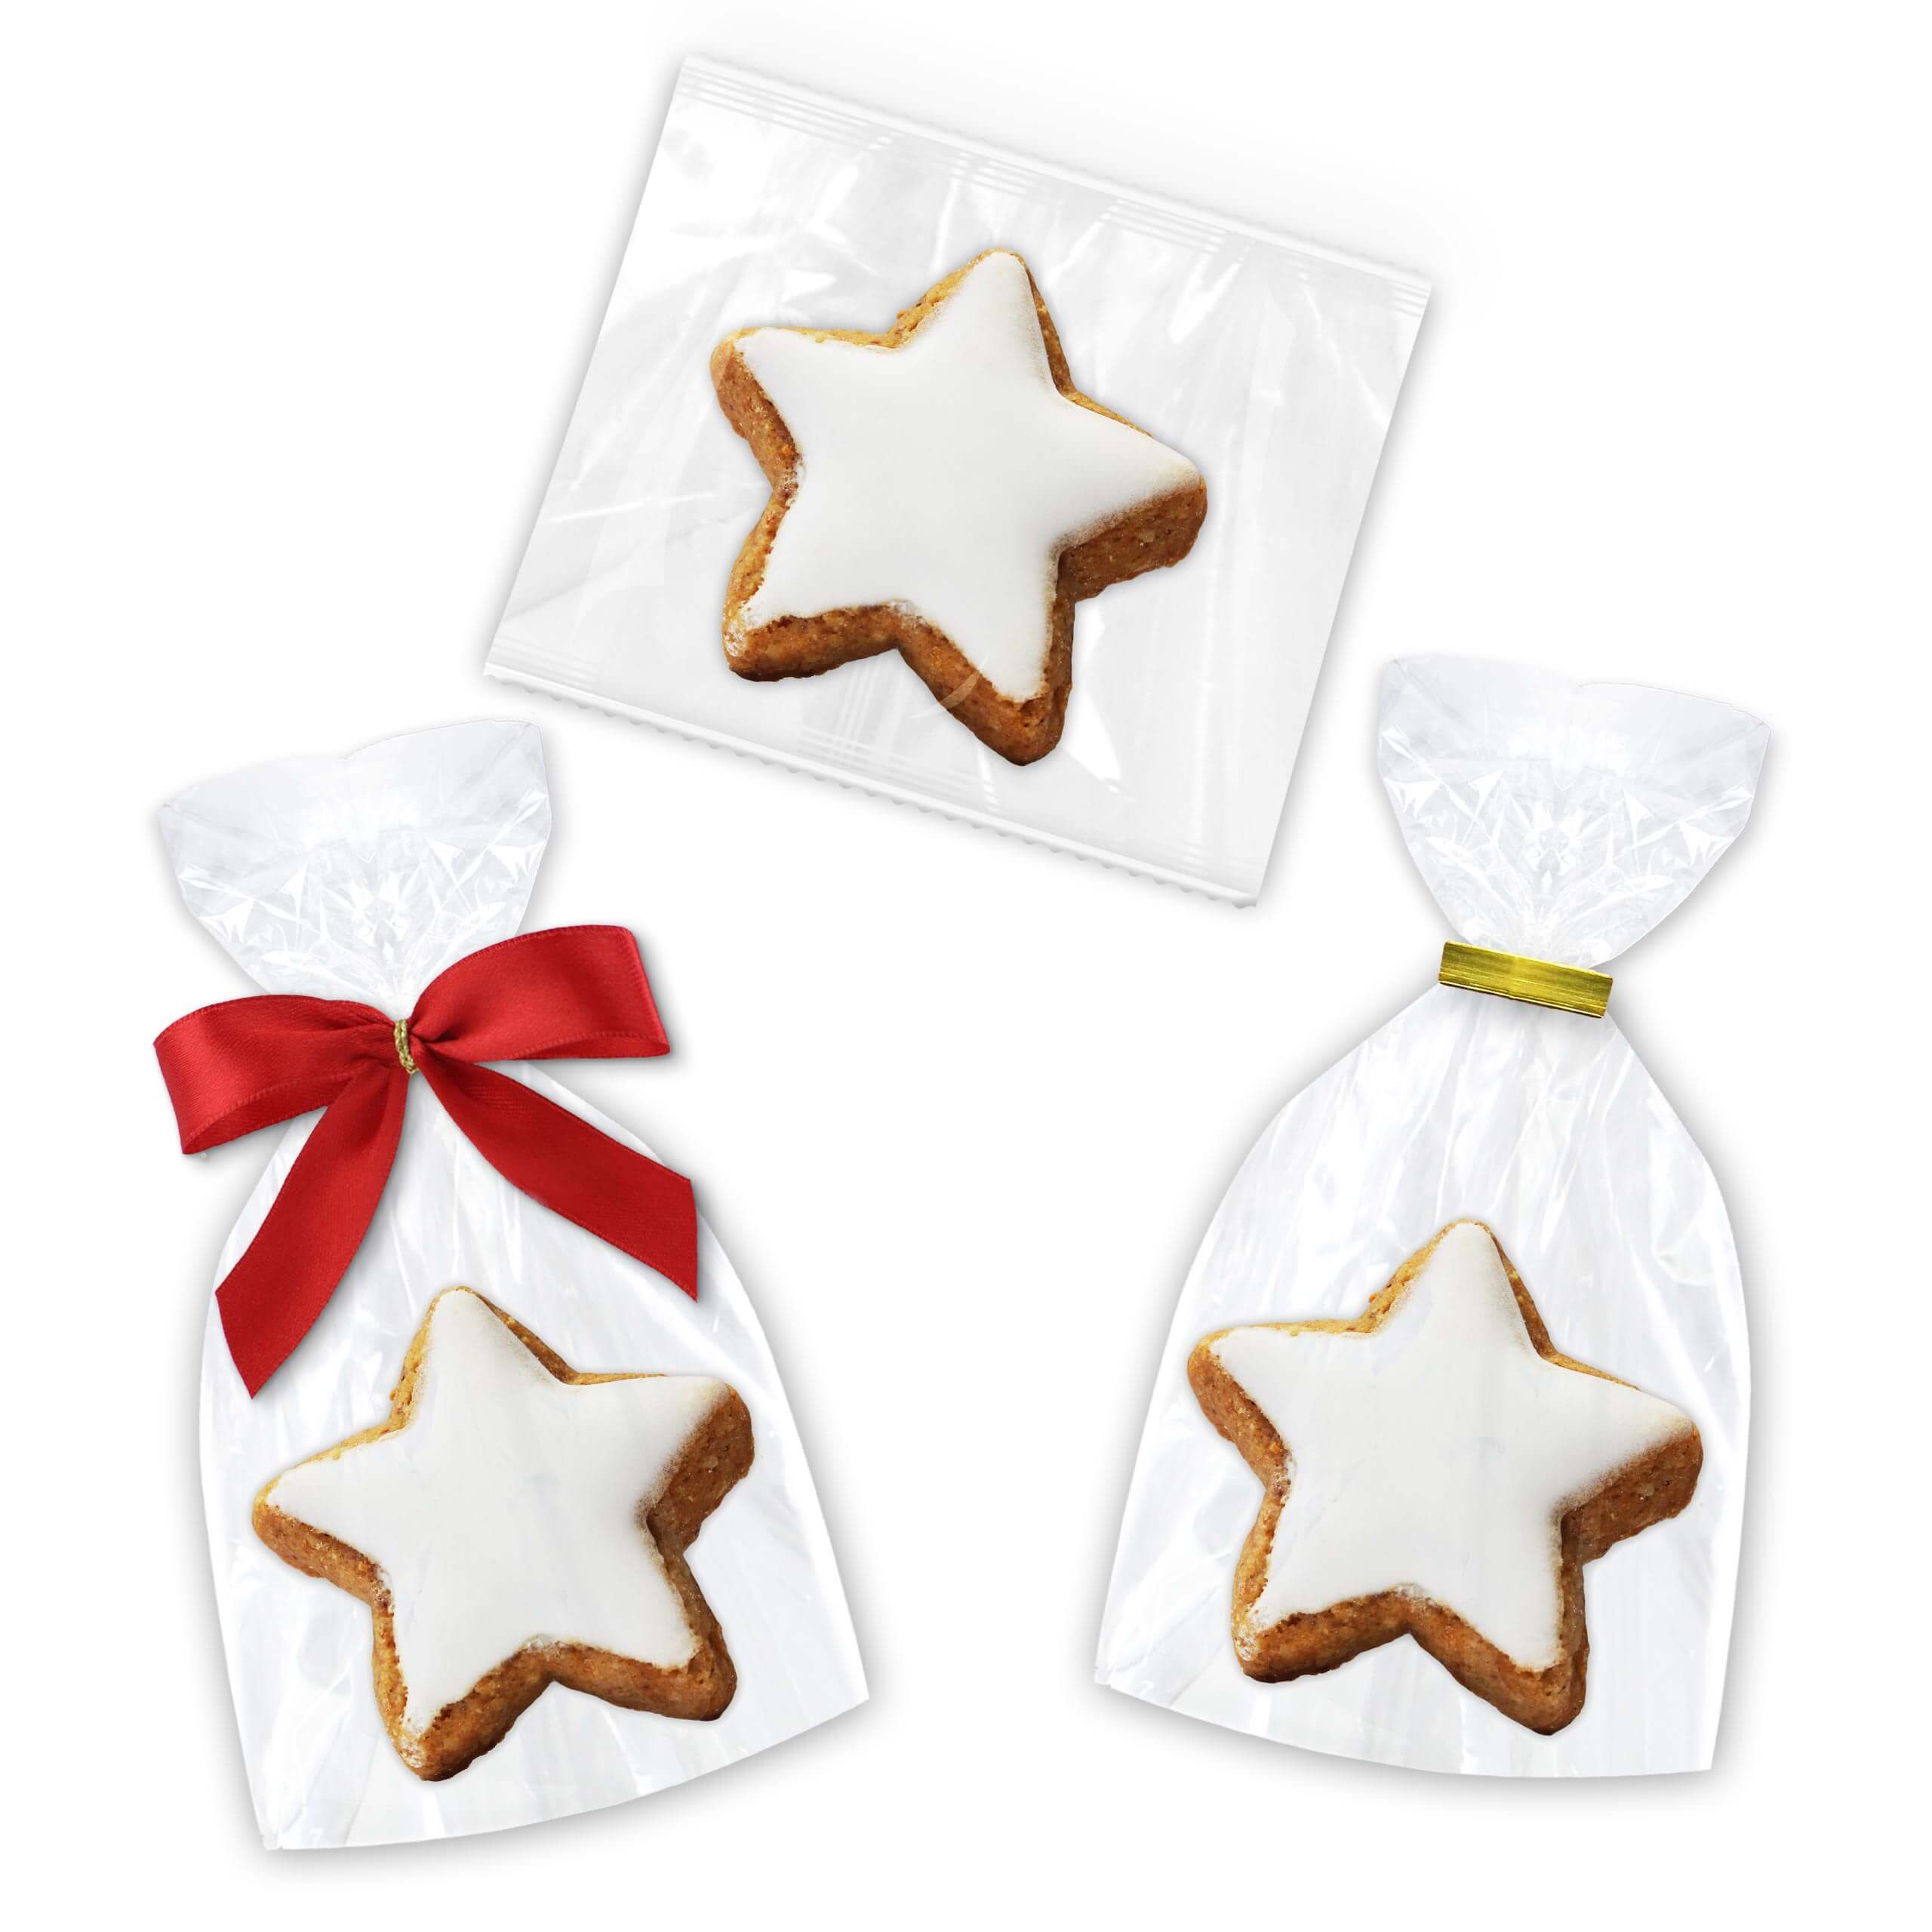 Cinnamon Star Cookie in different packaging